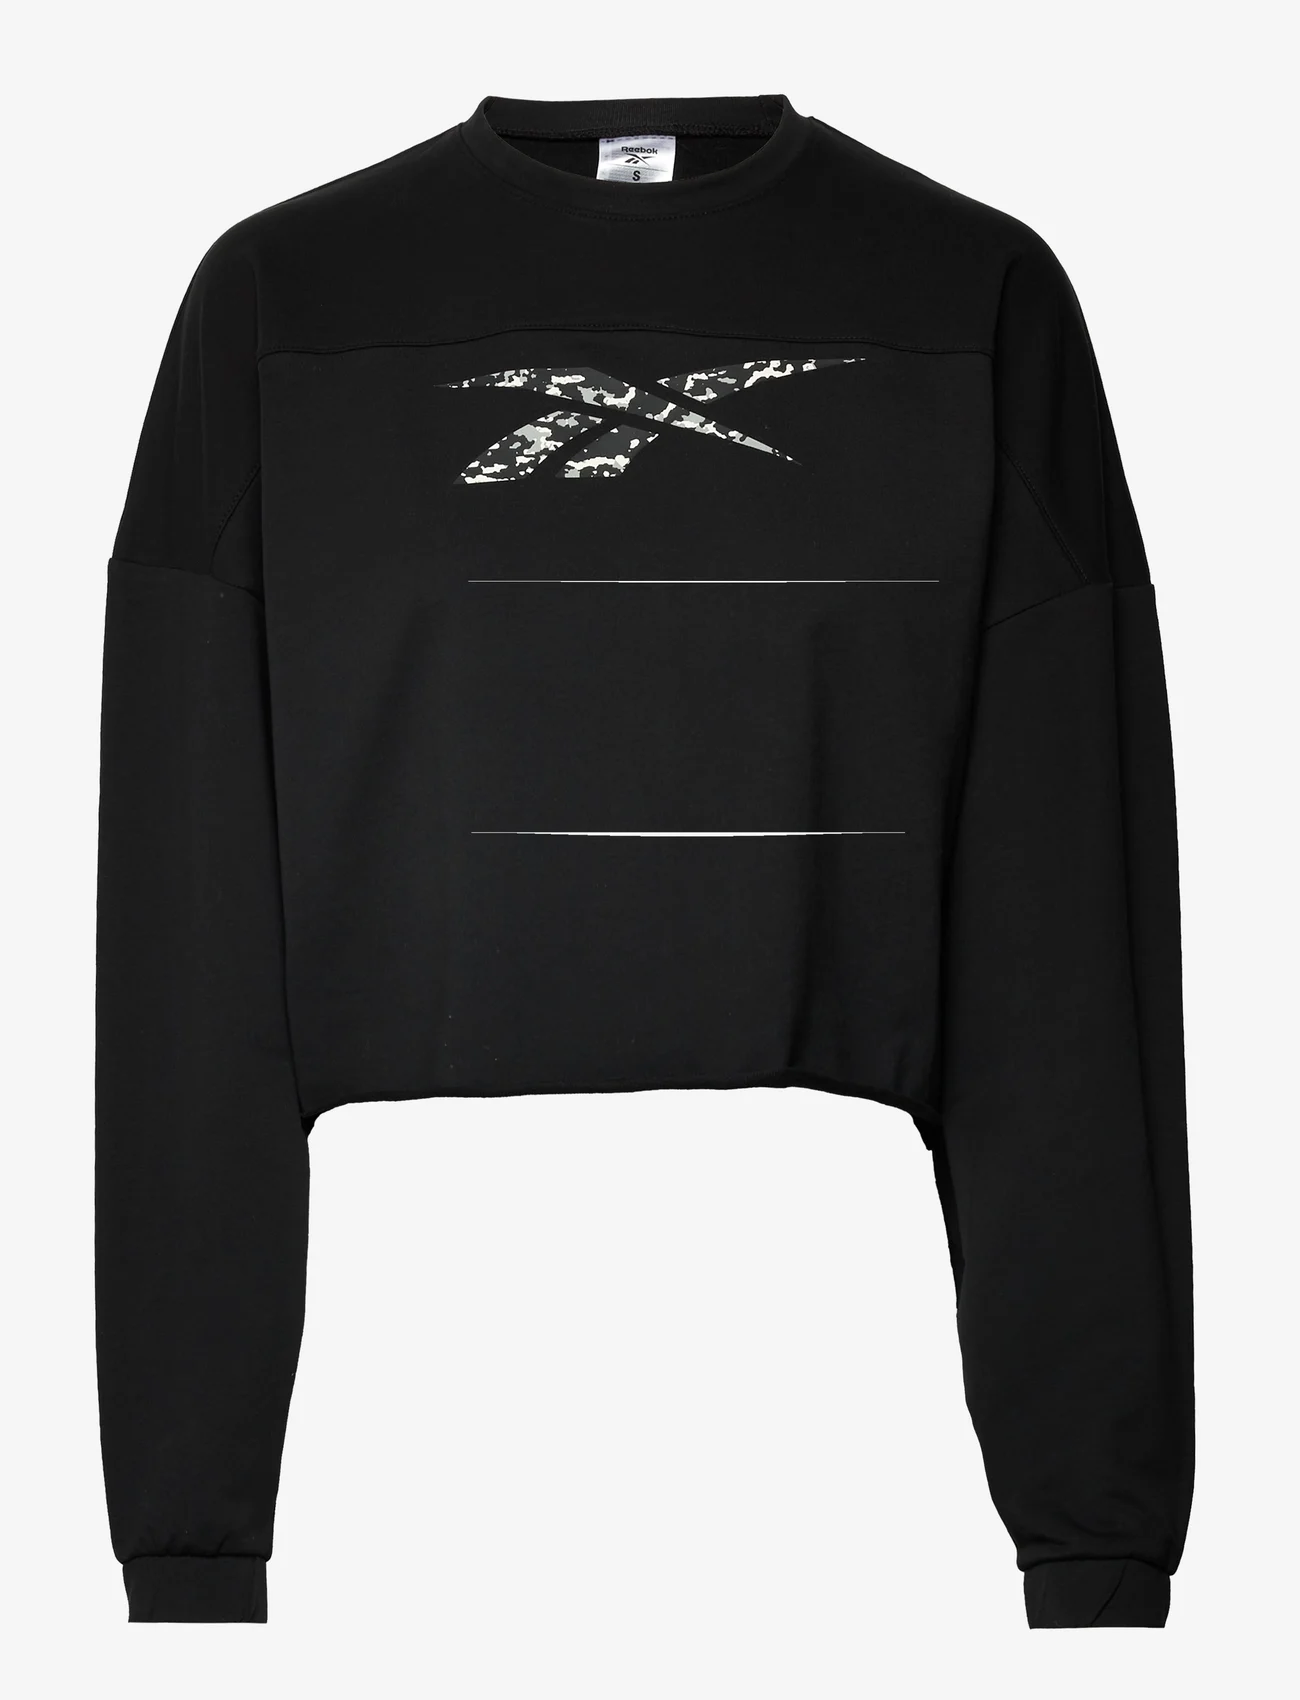 Reebok Performance - Modern Safari Coverup - sweatshirts - black - 0